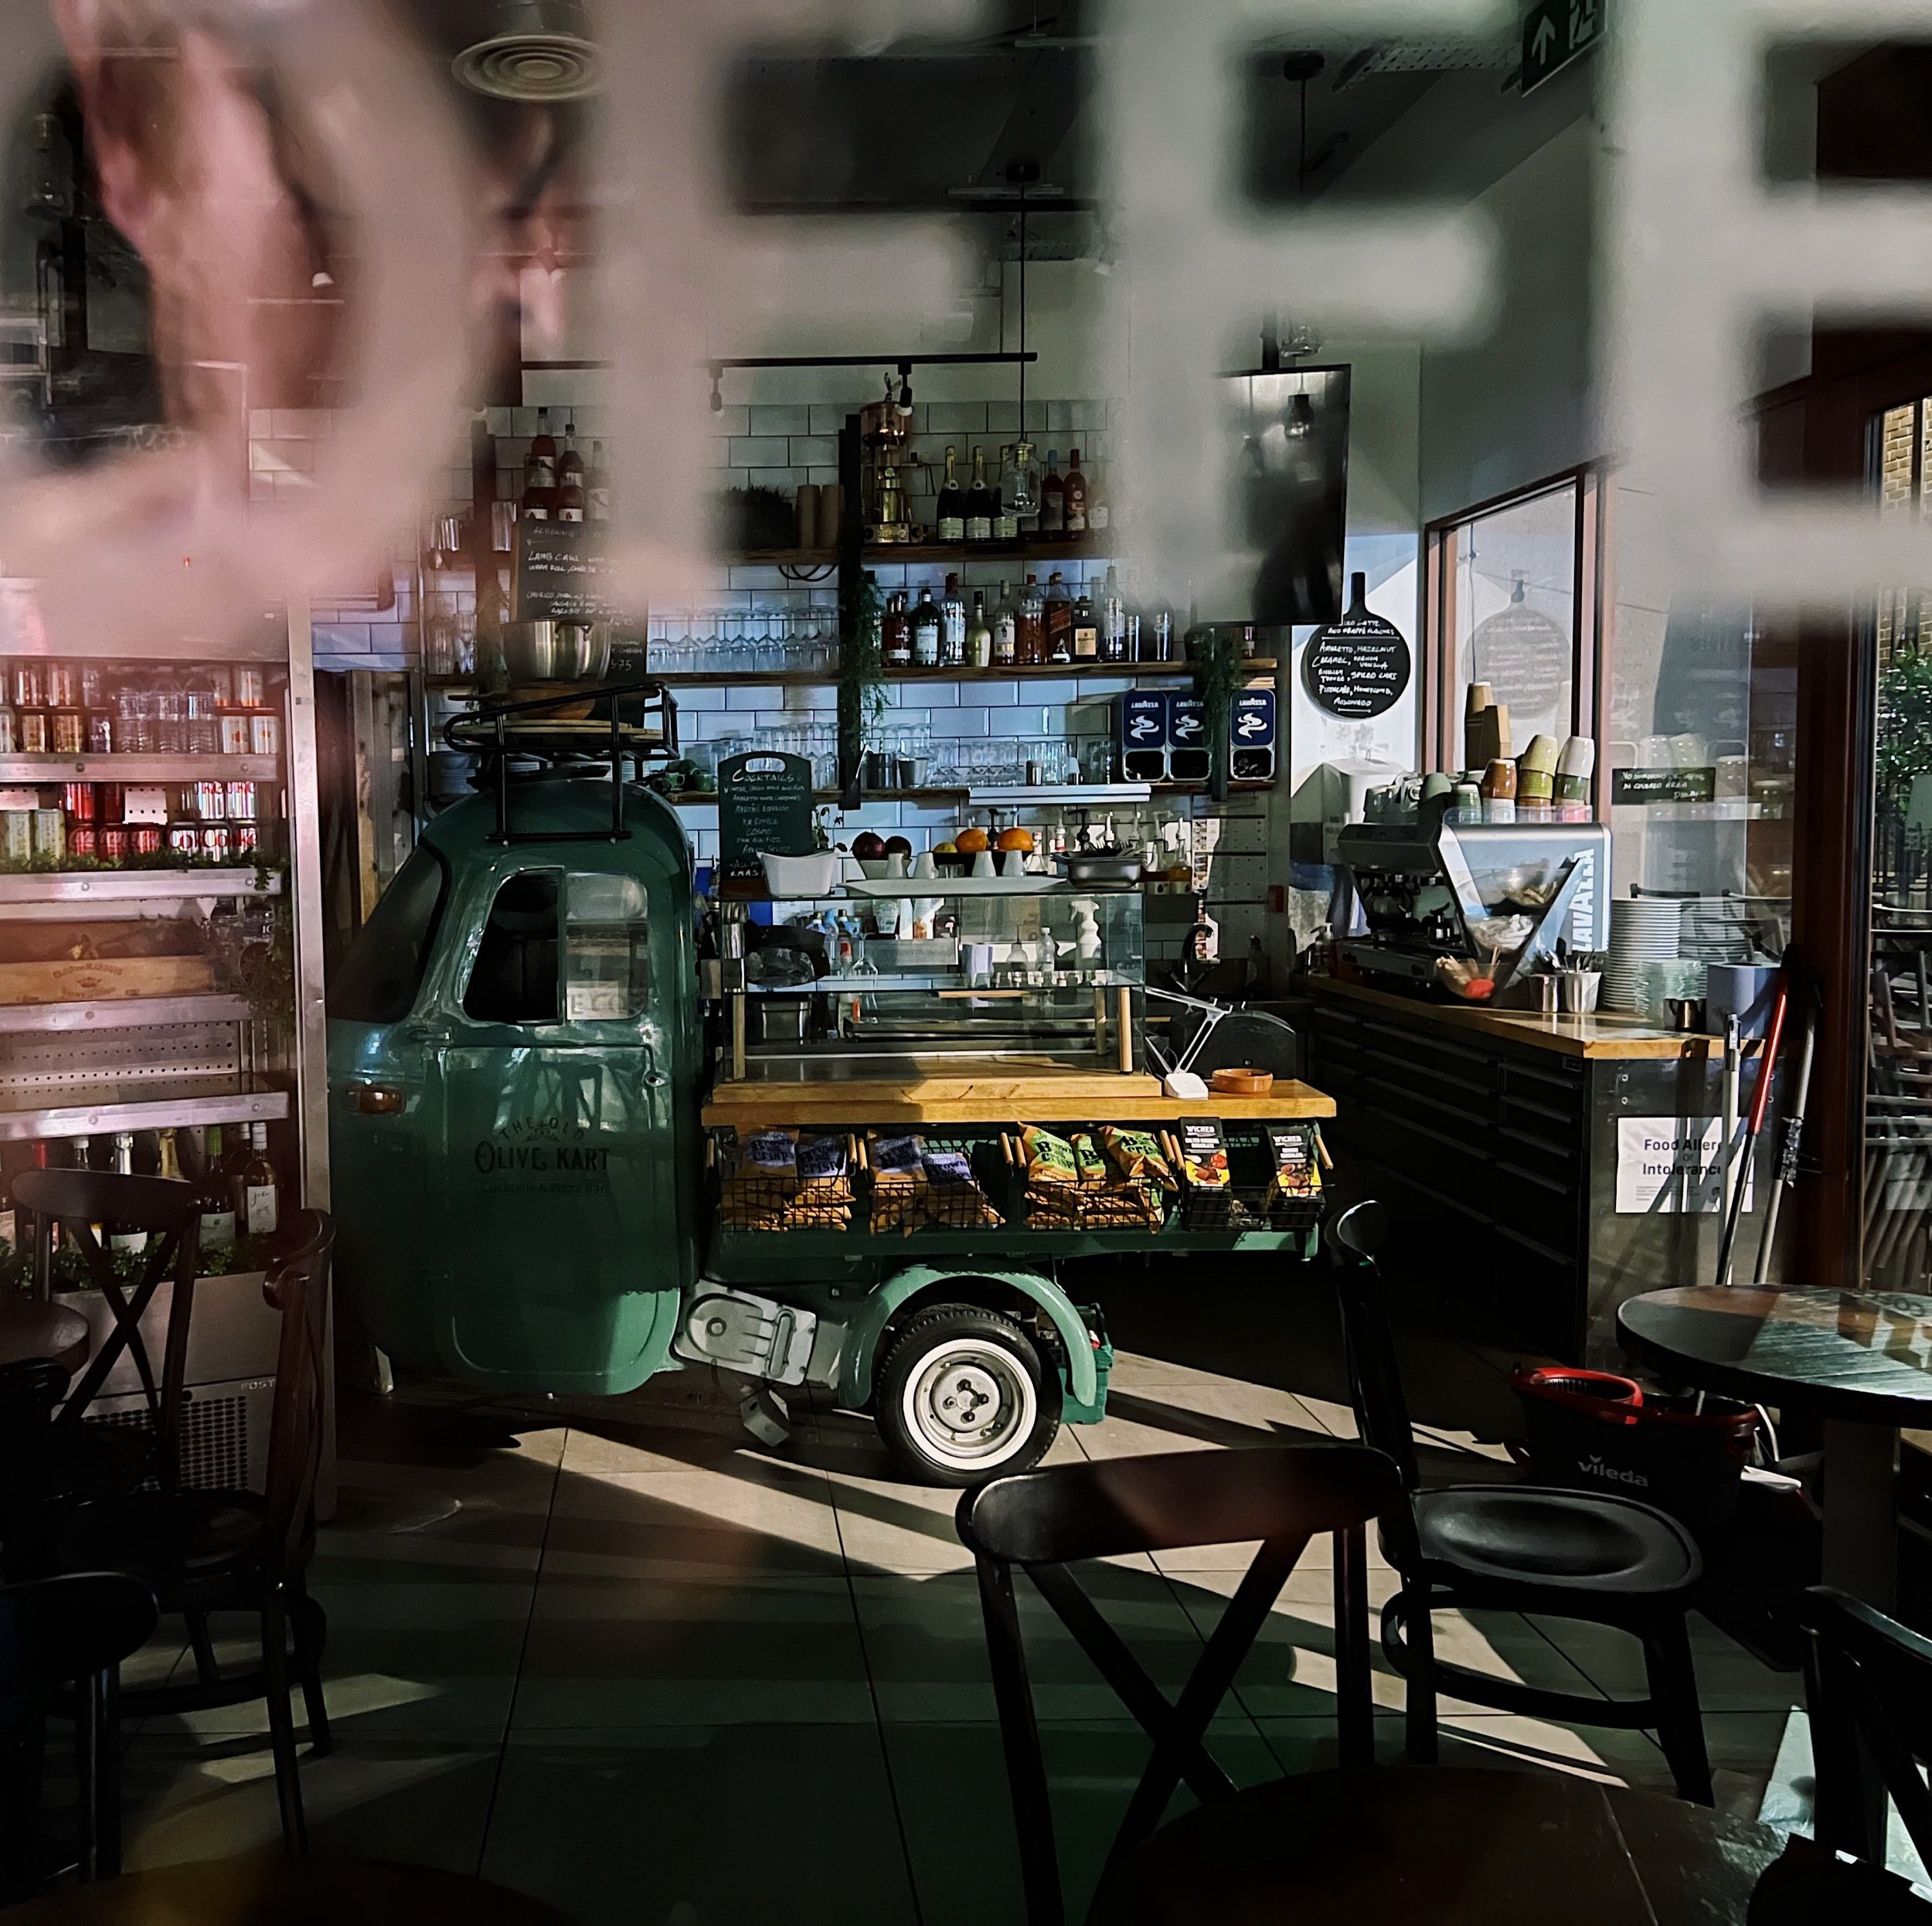 The Old Olive Kart Coffee Bar & Deli